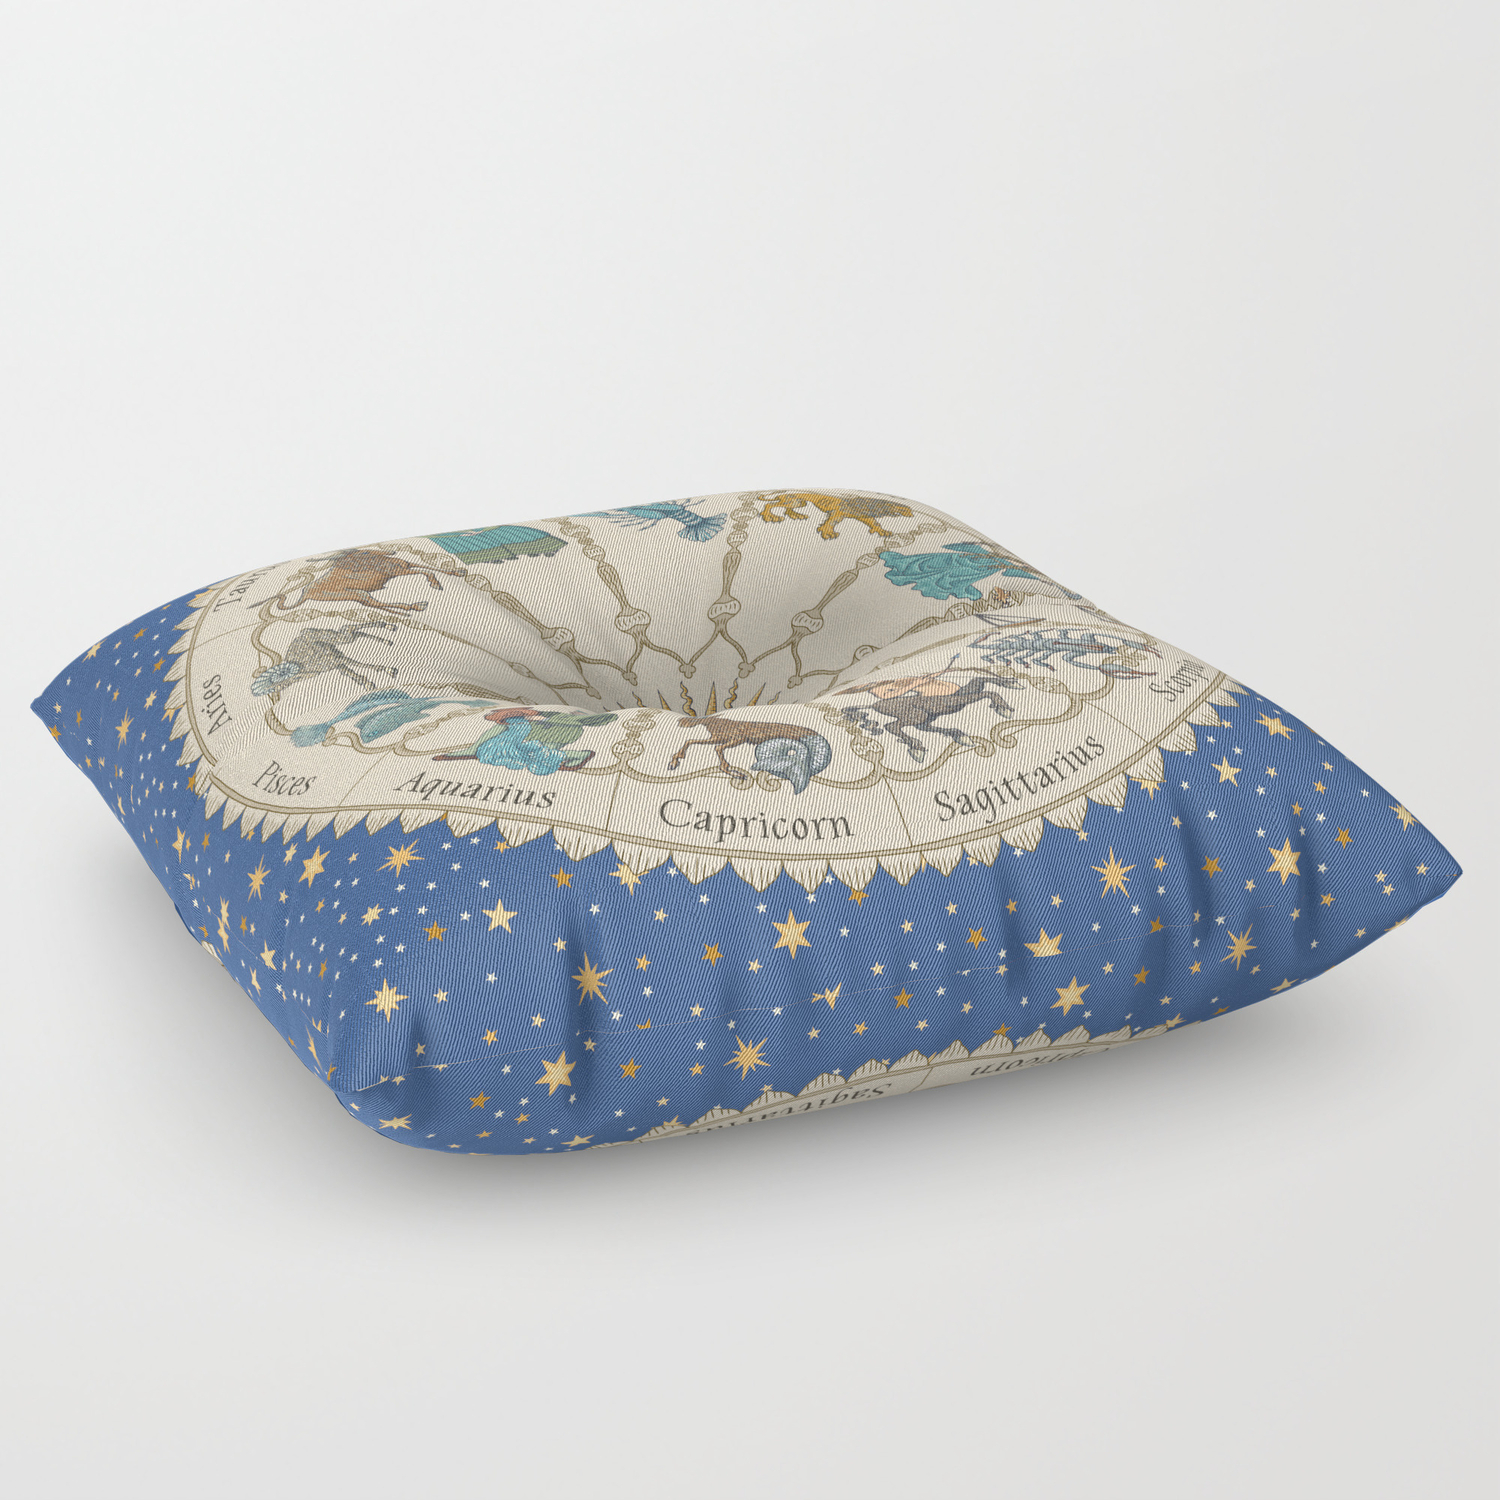 Astrology Horoscope Indian Large Floor Pillow Cushion Cover Meditation Seating Ottoman Throw Home Decor Sun Moon Virgo Star Sign Zodiac Symbol Celestial Cases Boho Mandala Hippie Round Sham Outdoor 